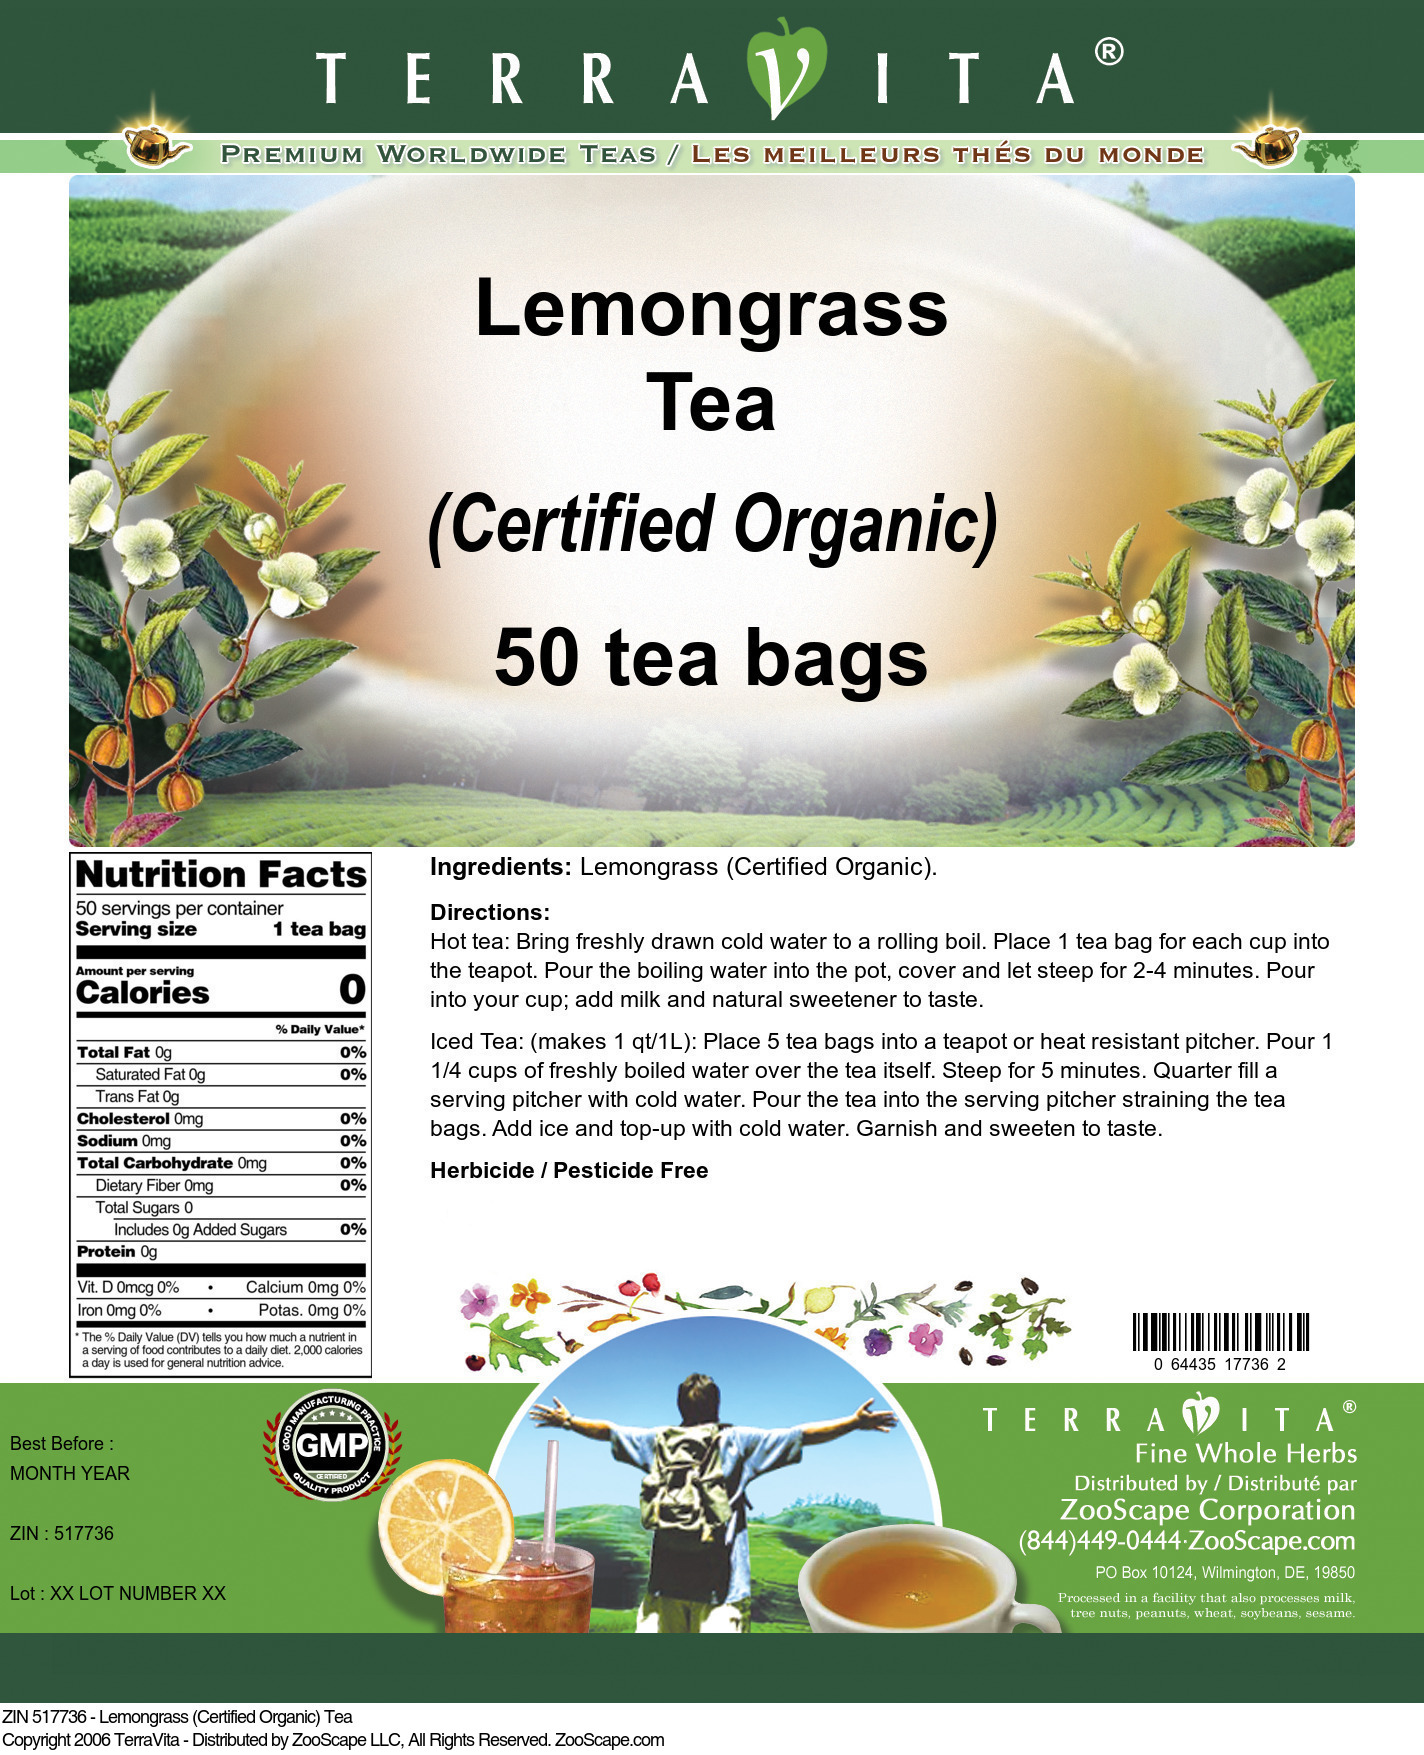 Lemongrass (Certified Organic) Tea - Label